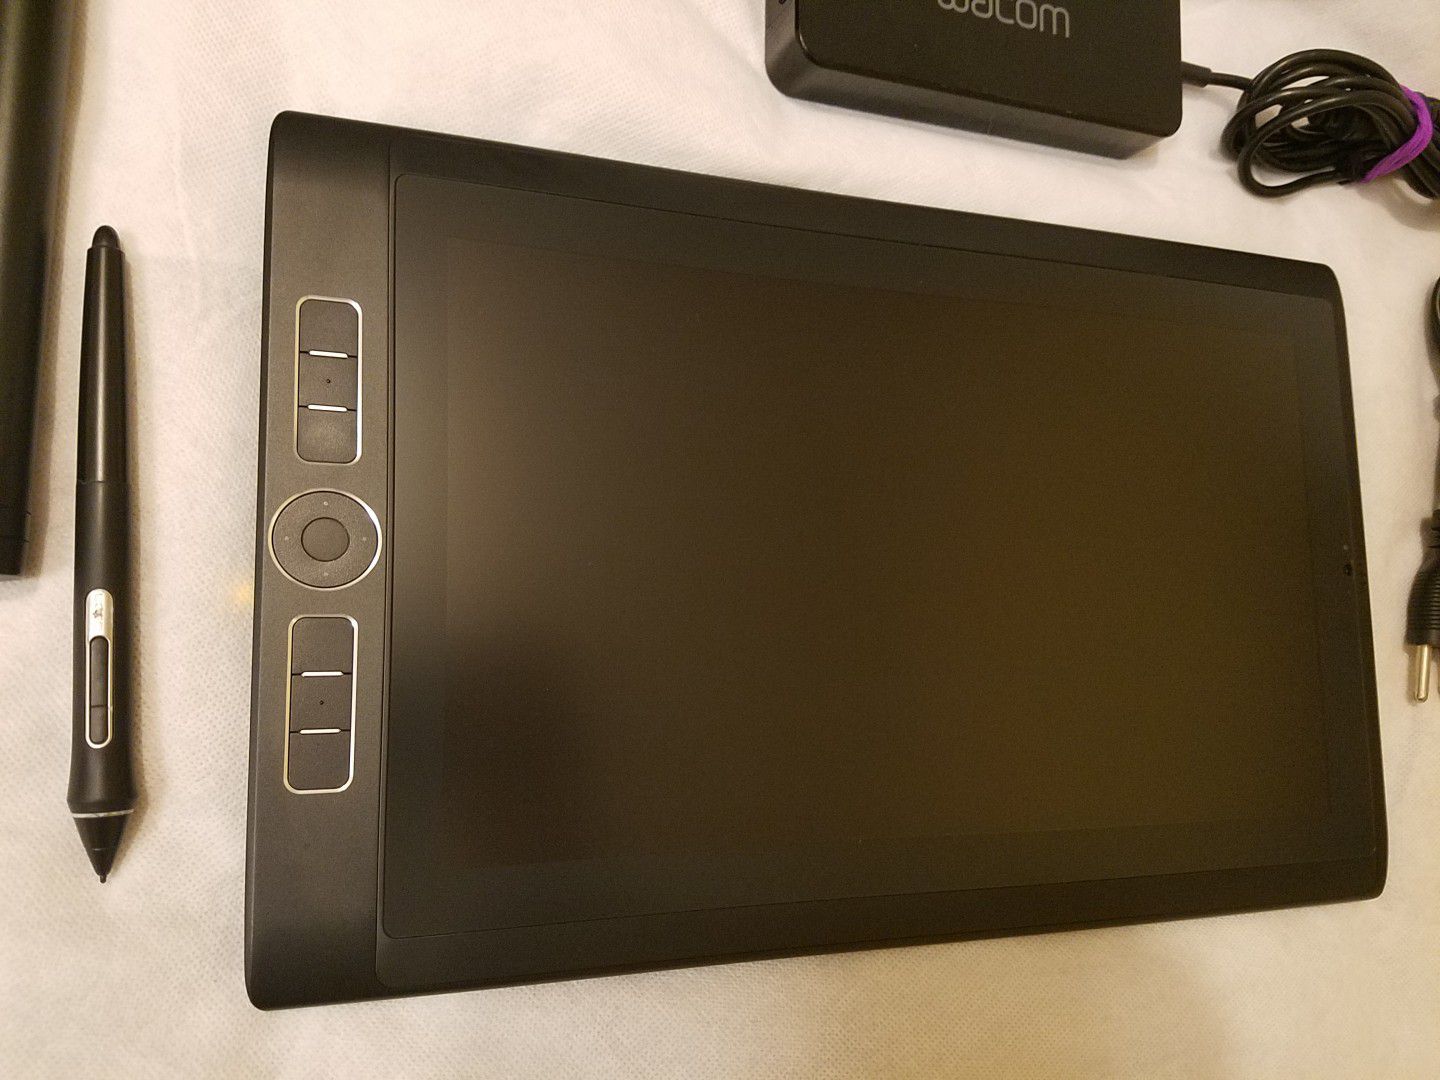 WACOM MobileStudio Pro 13 i5 512gb SD art tablet - laptop computer +BONUS